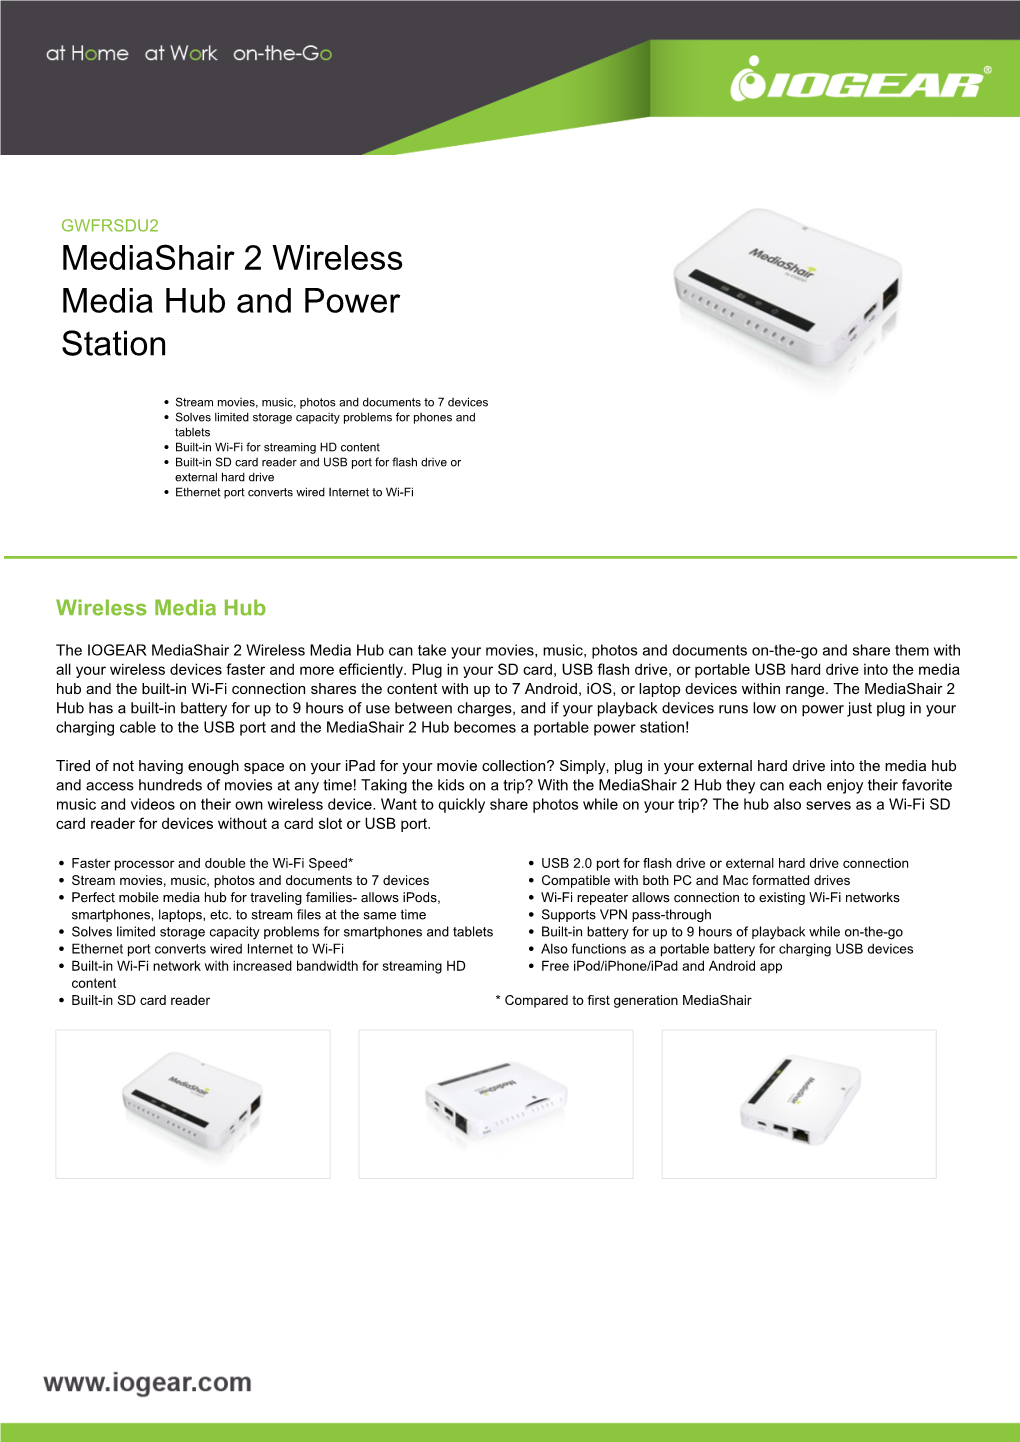 Mediashair 2 Wireless Media Hub and Power Station